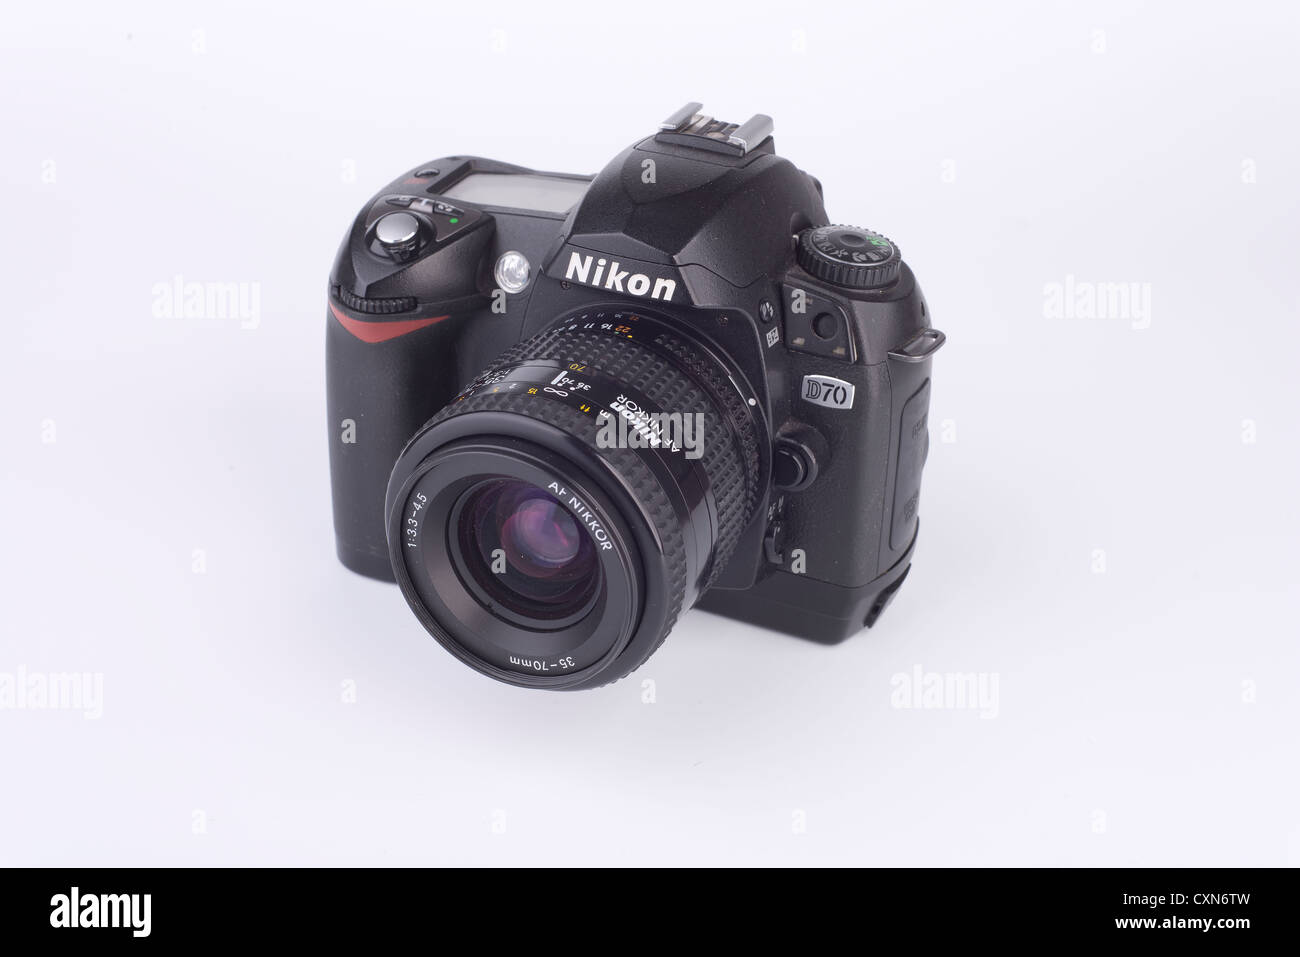 Nikon d70 hi-res stock photography and images - Alamy